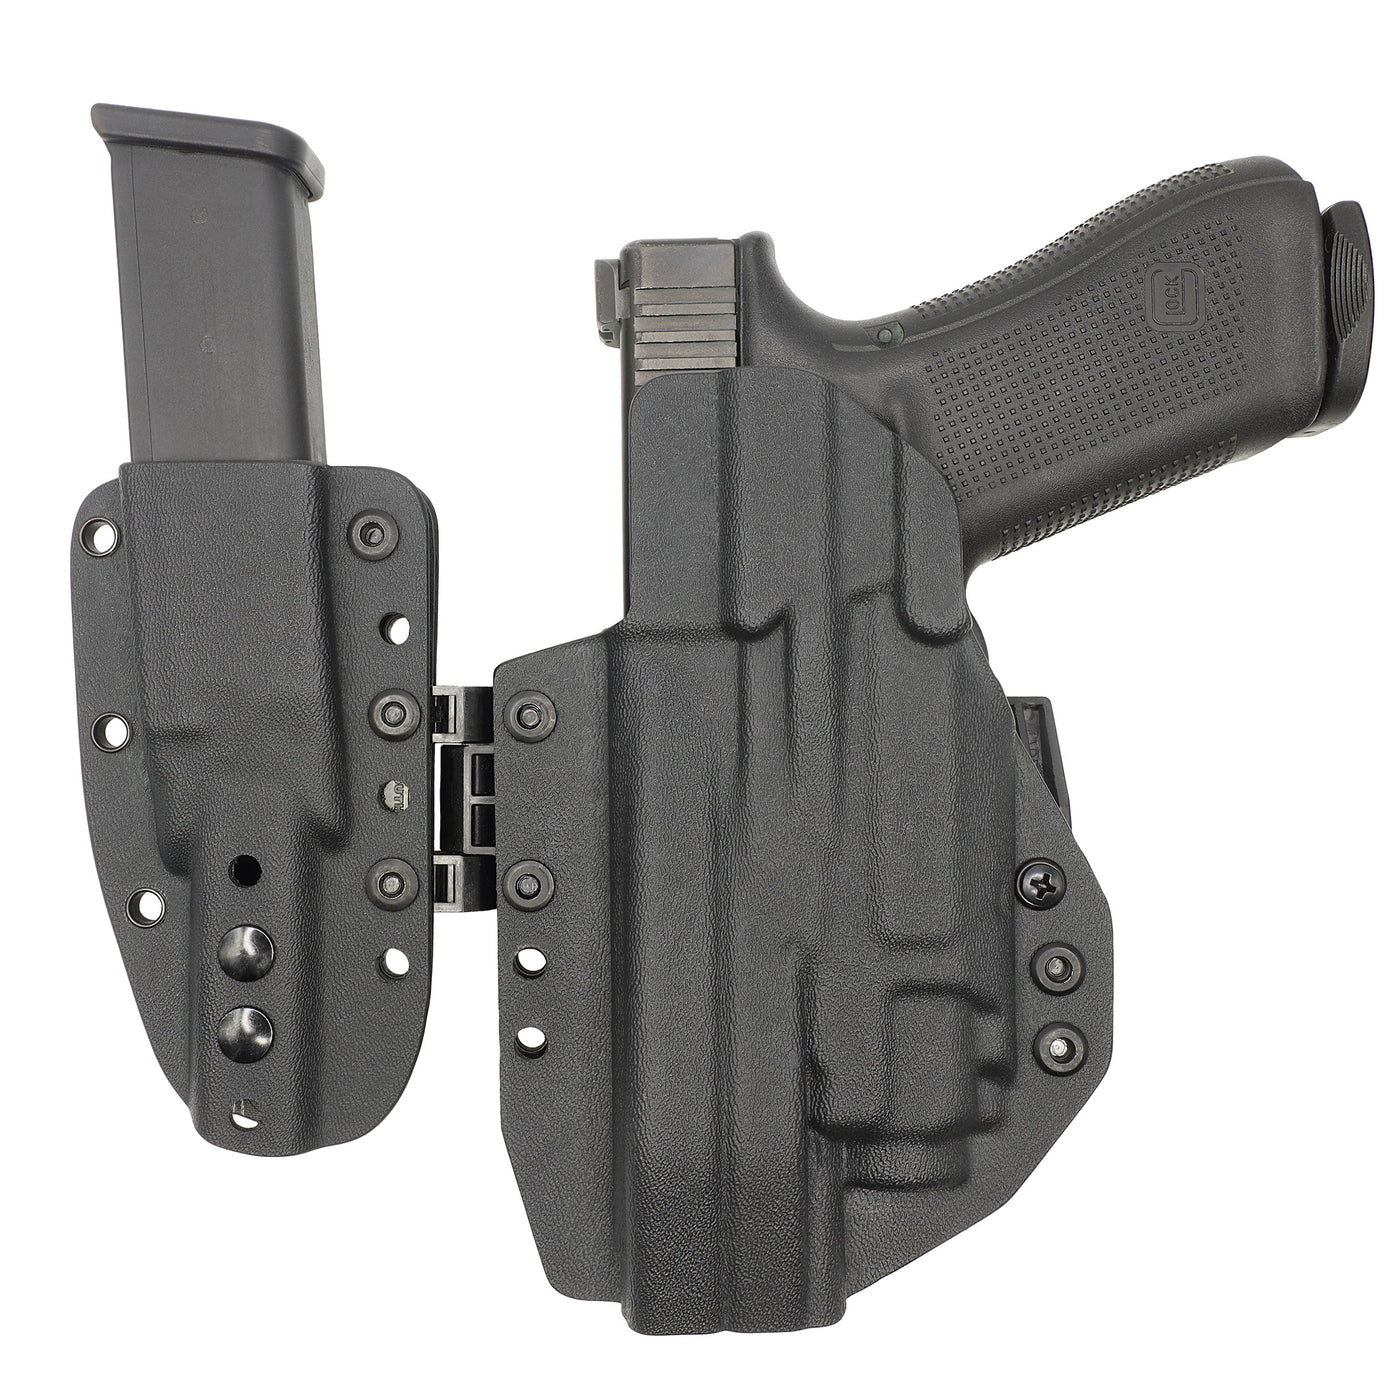 C&G Holsters custom AIWB MOD1 LIMA Glock 17/19 Streamlight TLR8 holstered back view